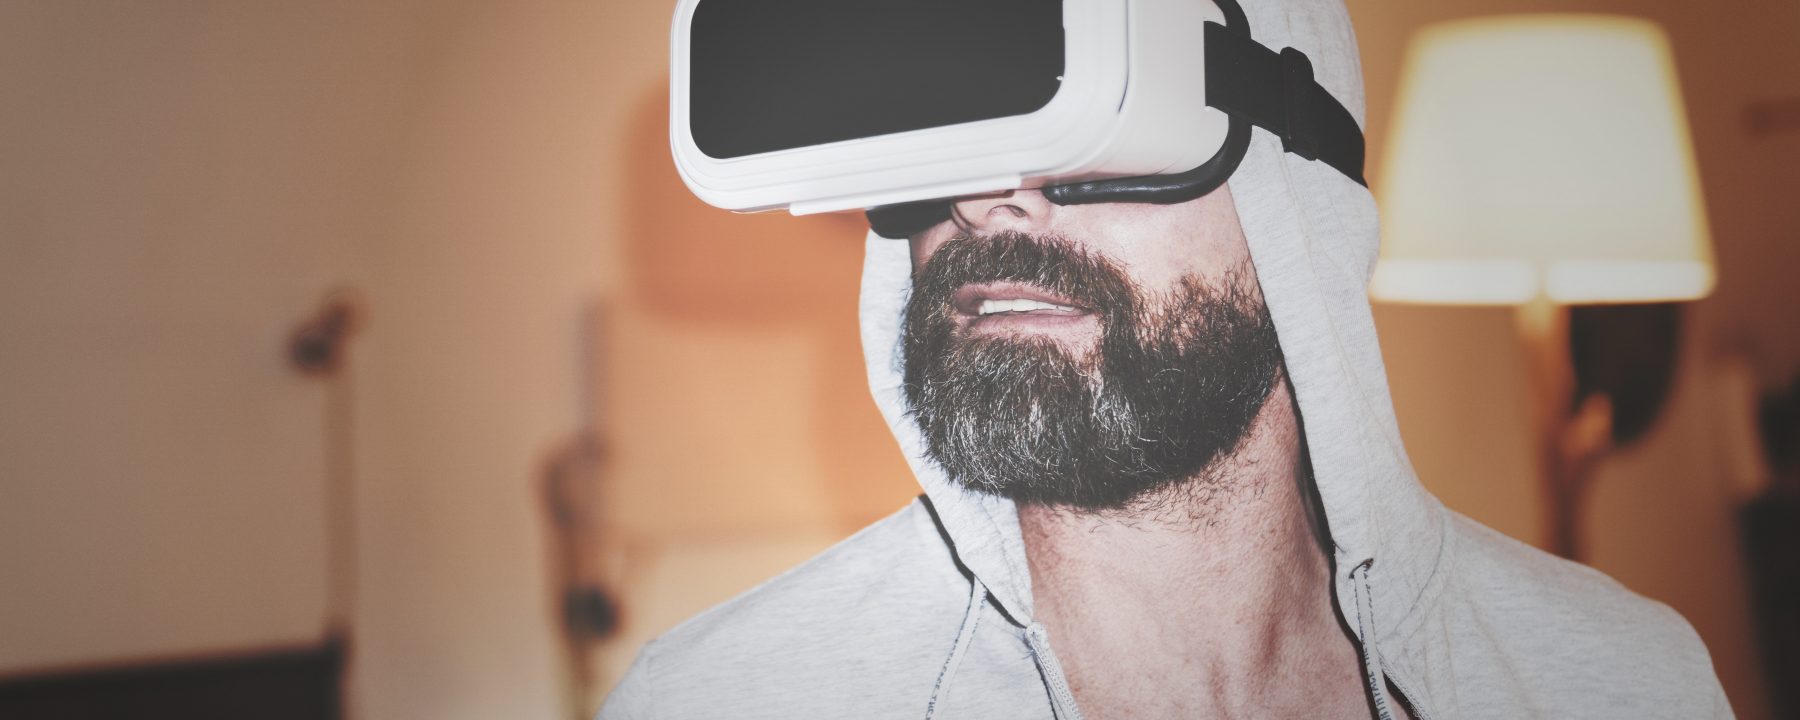 Virtual-reality-vr-talk-foredrag-man-glasses